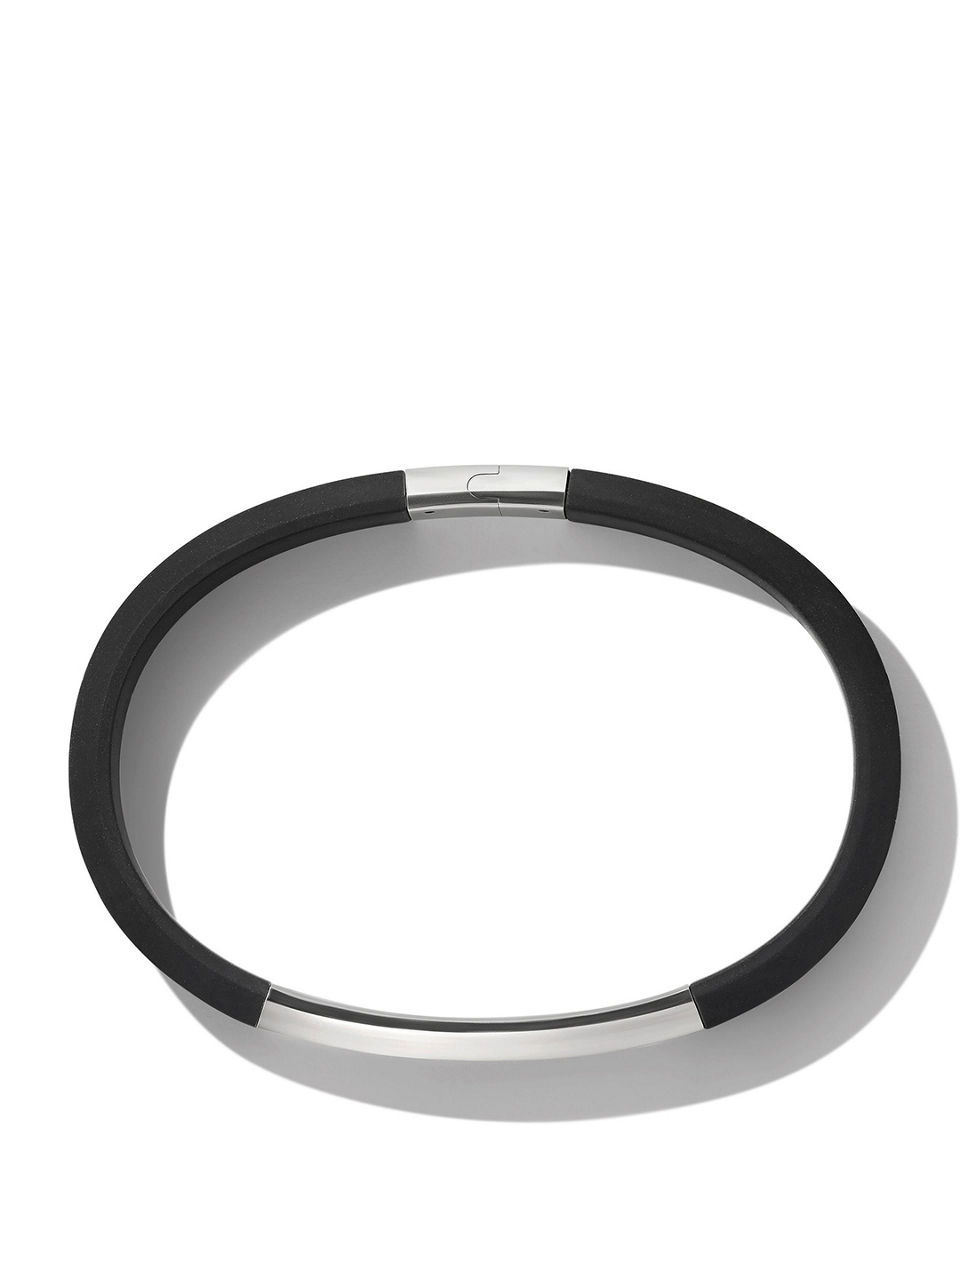 Streamline® Id Black Rubber Bracelet With Sterling Silver